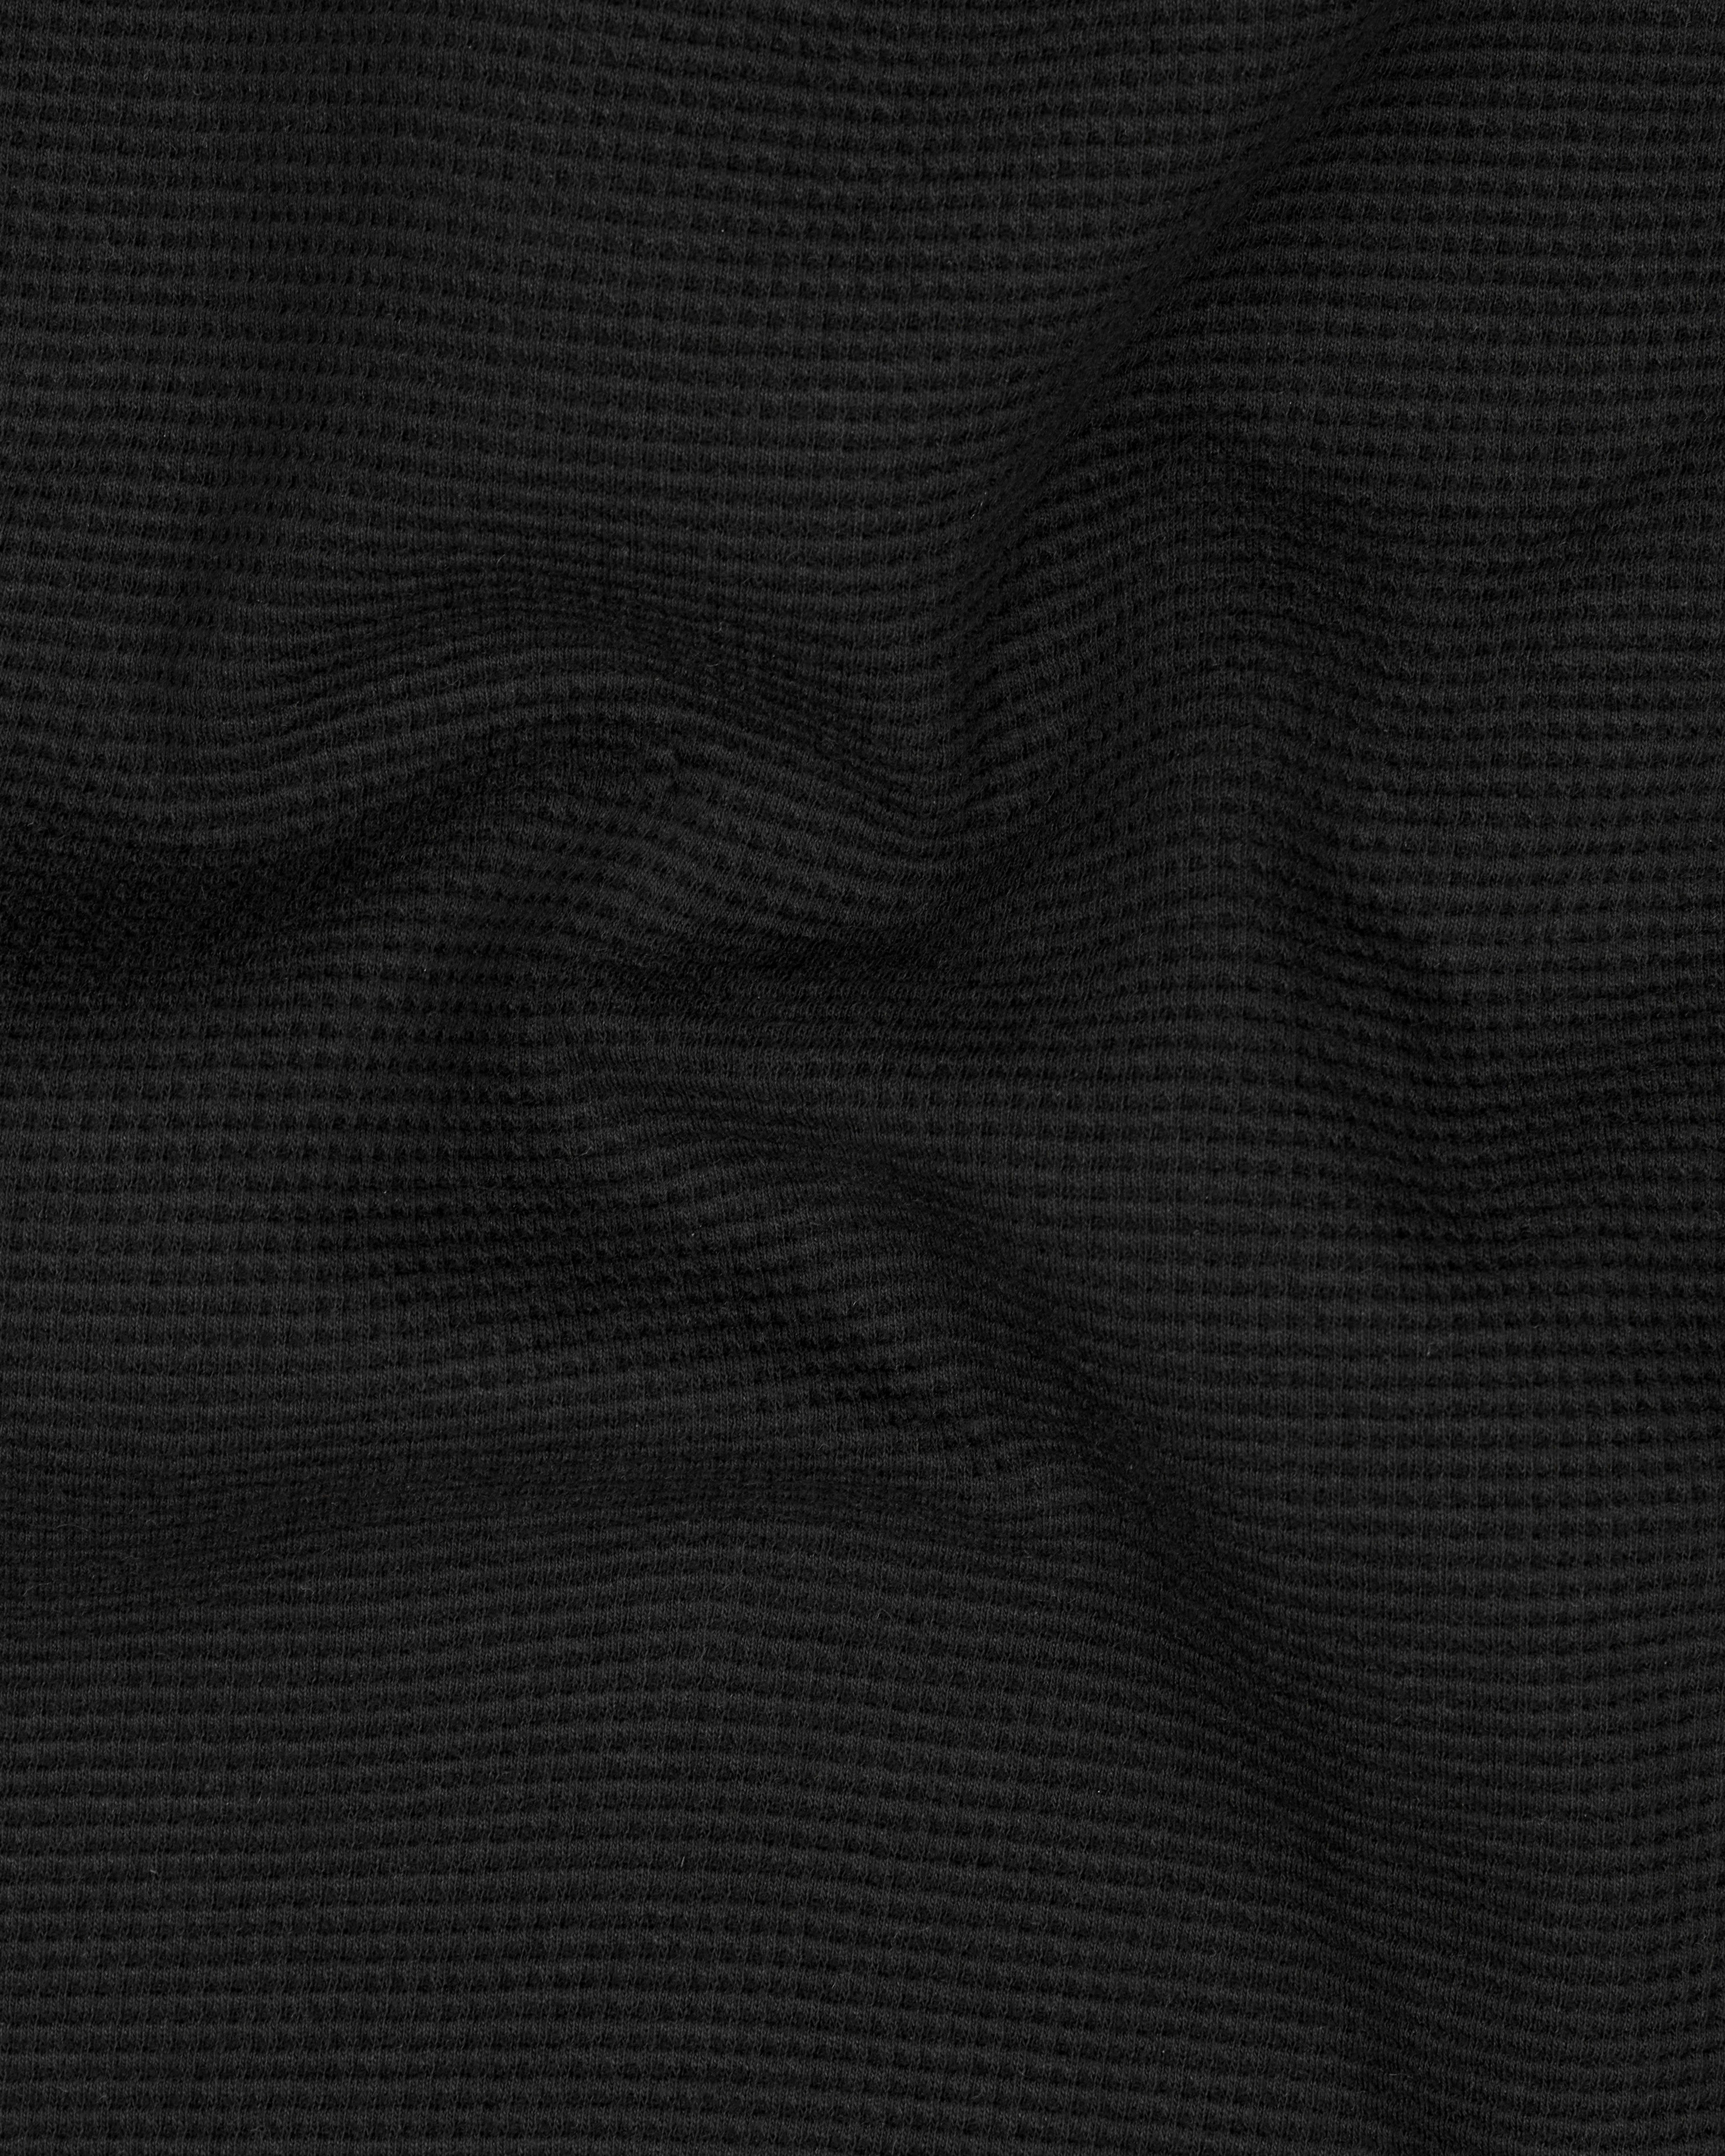 Jade Black With Round Neck  Super Soft Premium Cotton T-Shirt TS764-S, TS764-M, TS764-L, TS764-XL, TS764-XXL